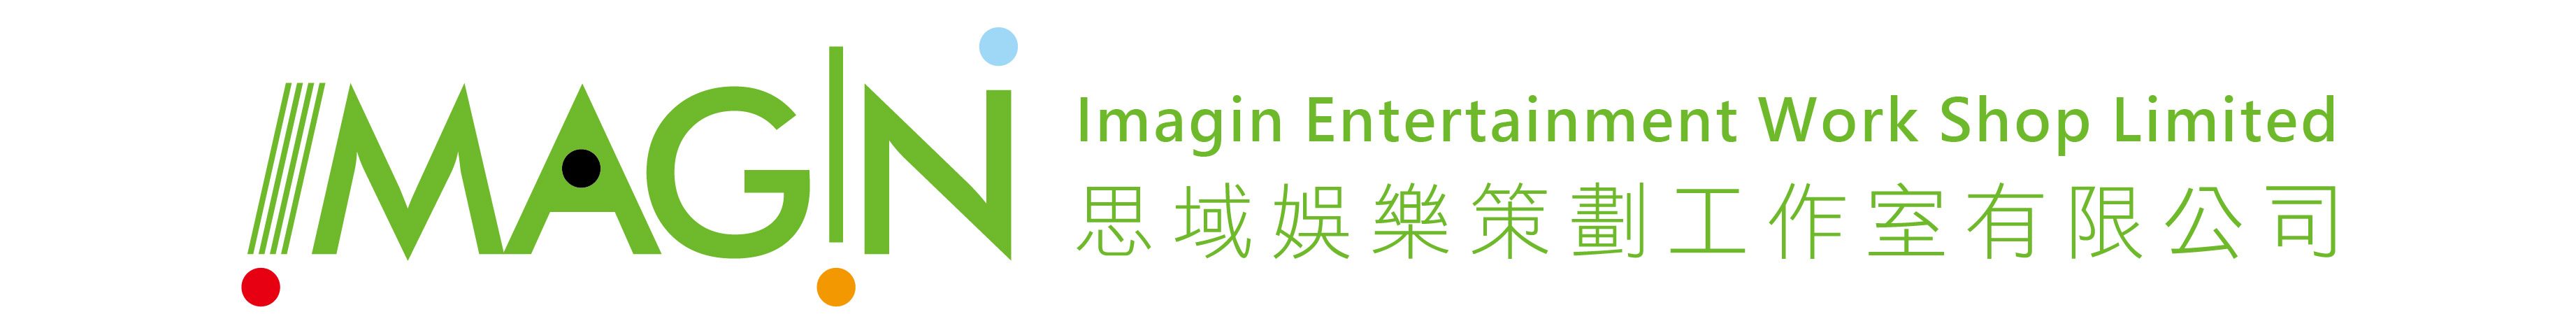 Imagin Entertainment Work Shop Limited 思域娛樂策劃工作室有限公司